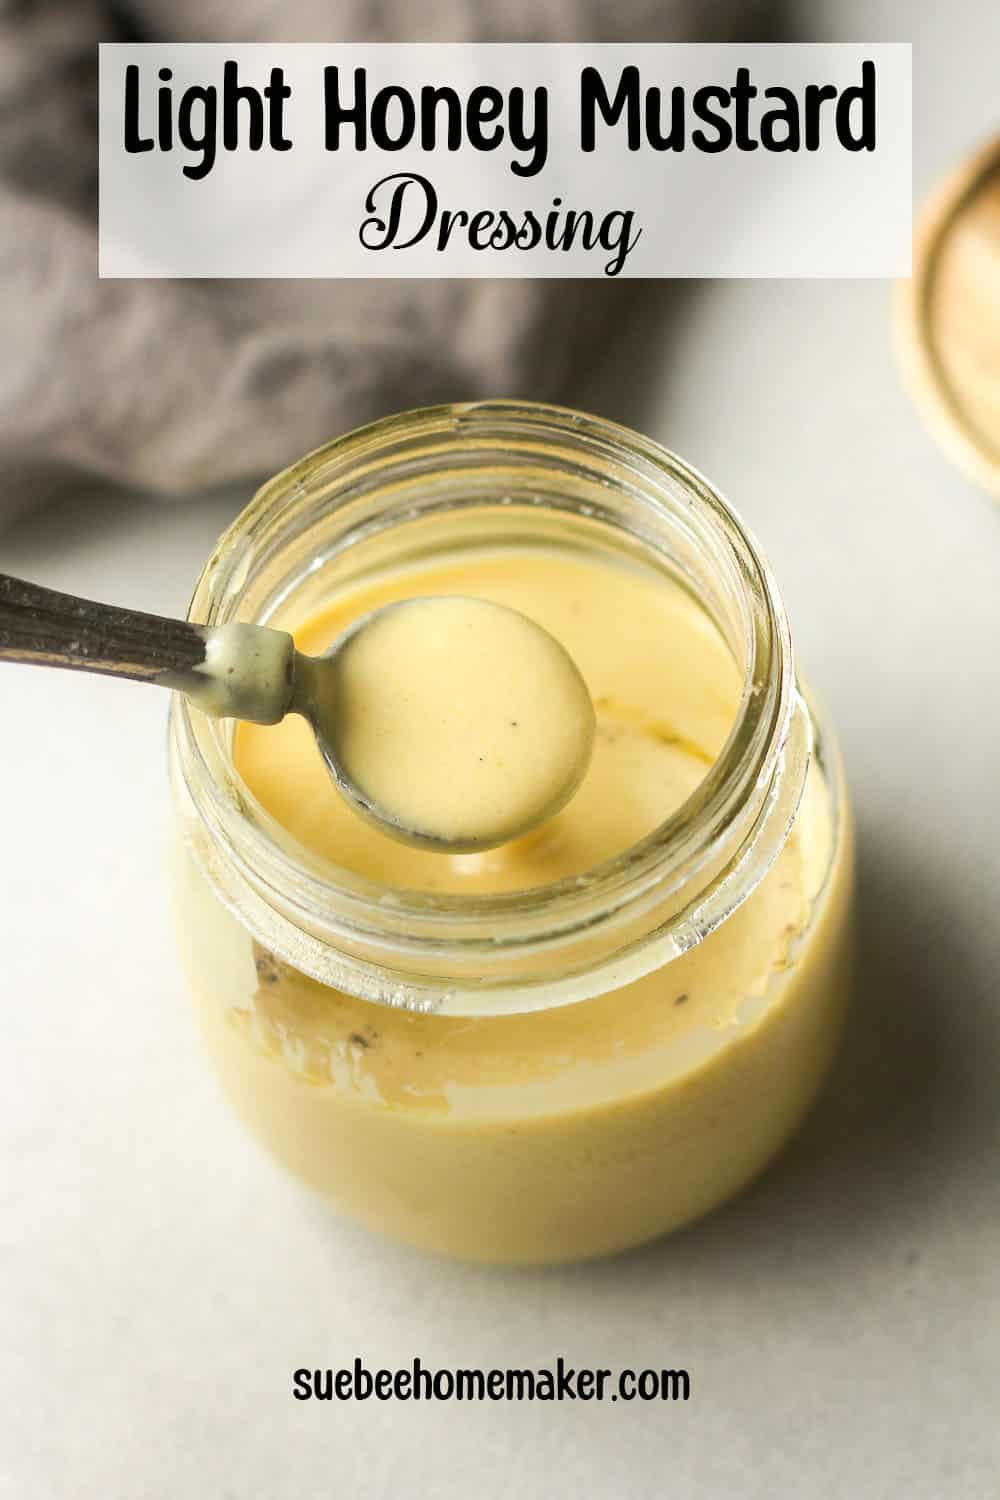 A spoonful of honey mustard dressing over a mason jar.